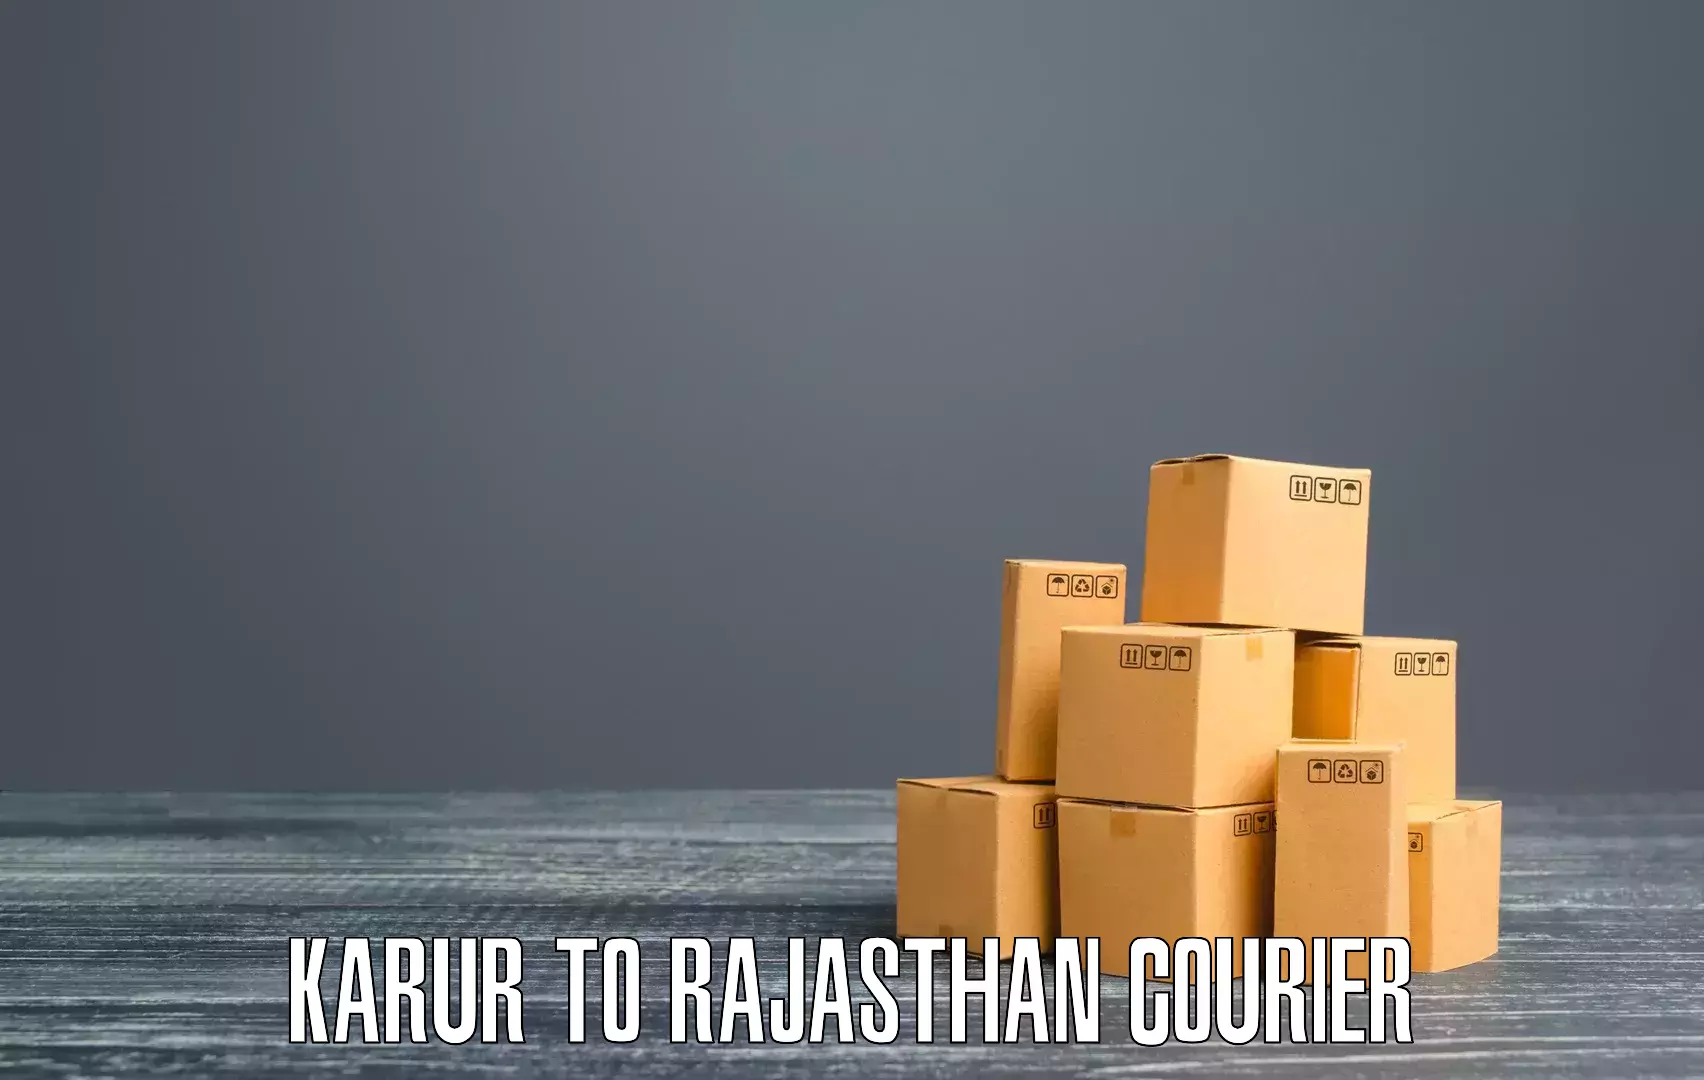 Courier service partnerships Karur to Alwar